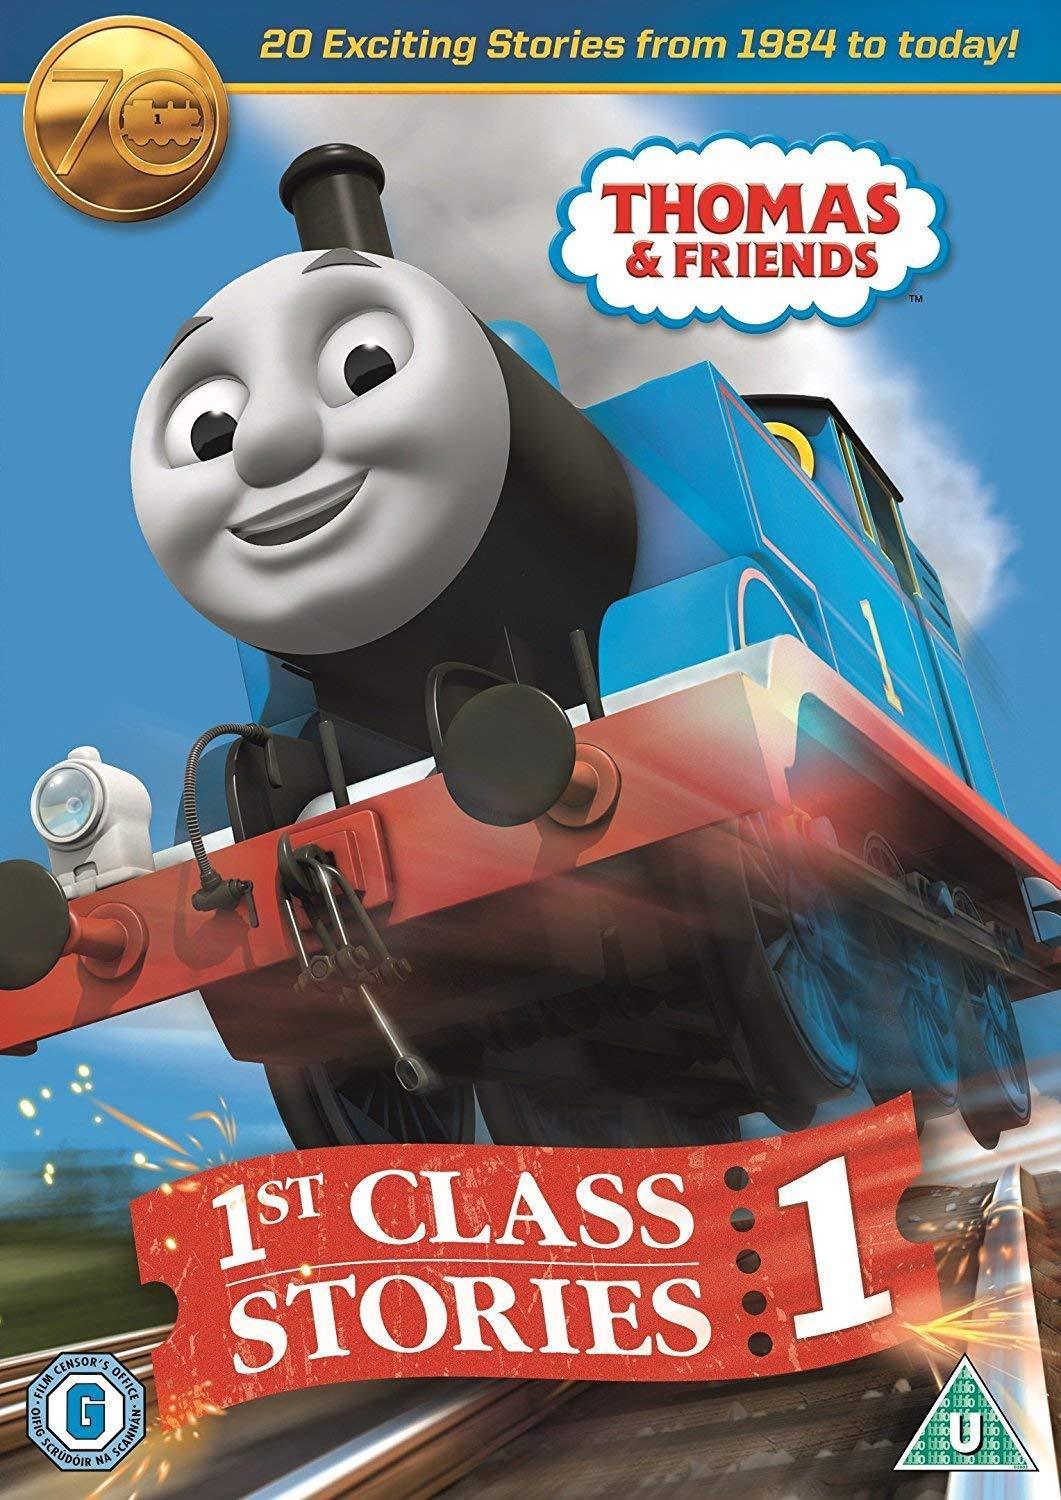 Thomas & Friends: 1st Class Stories, No 1 DVD (2.5hrs, 20 Stories) Region 2 (UK)